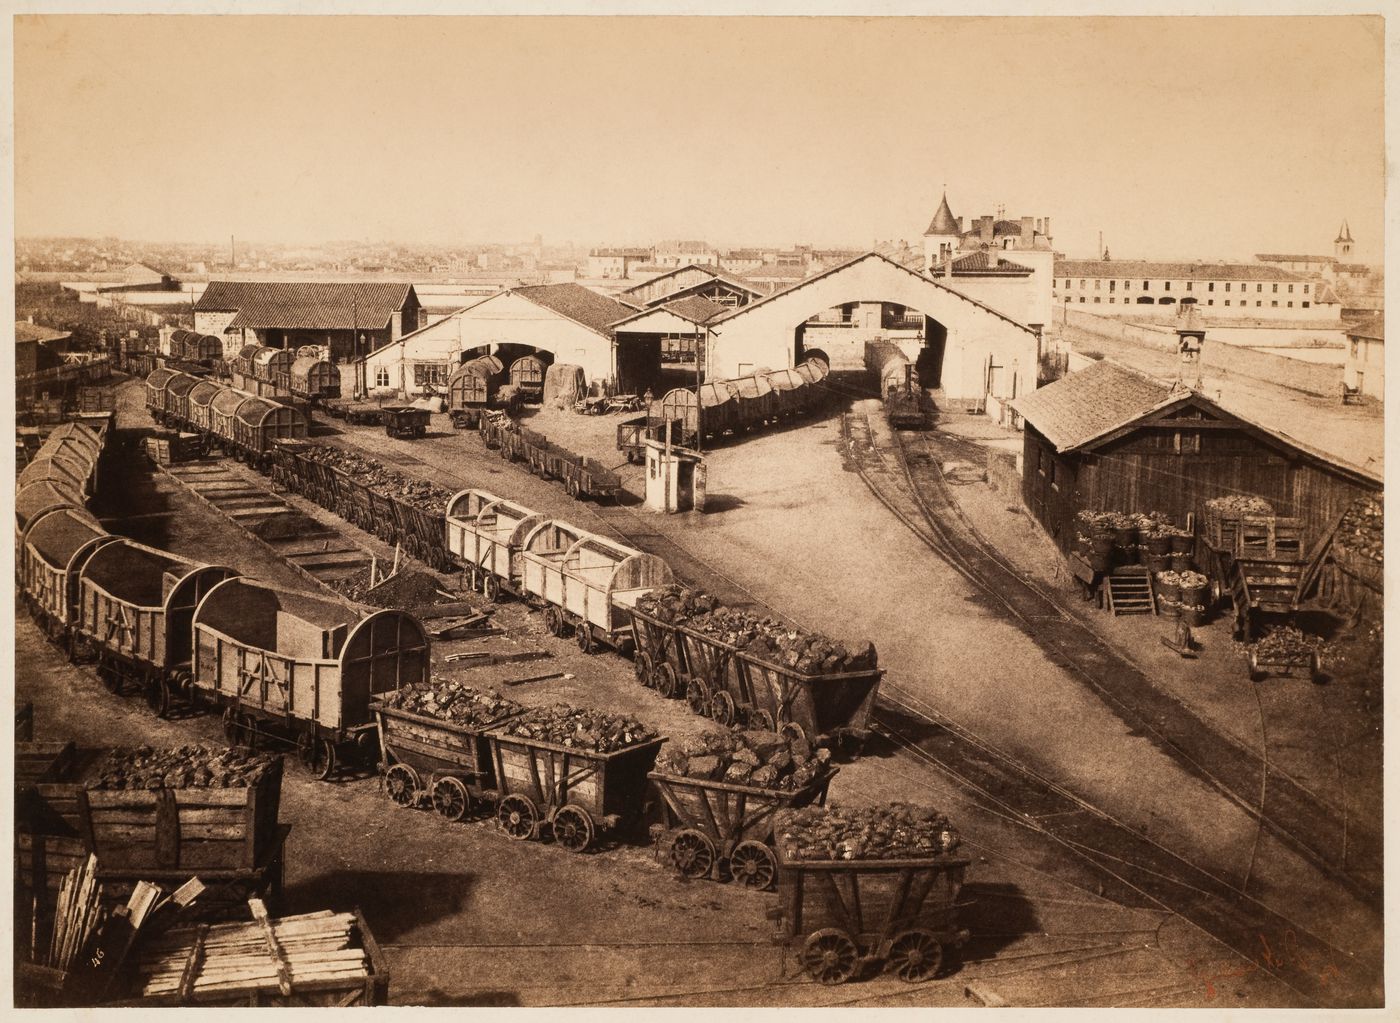 View of railroad yard, France